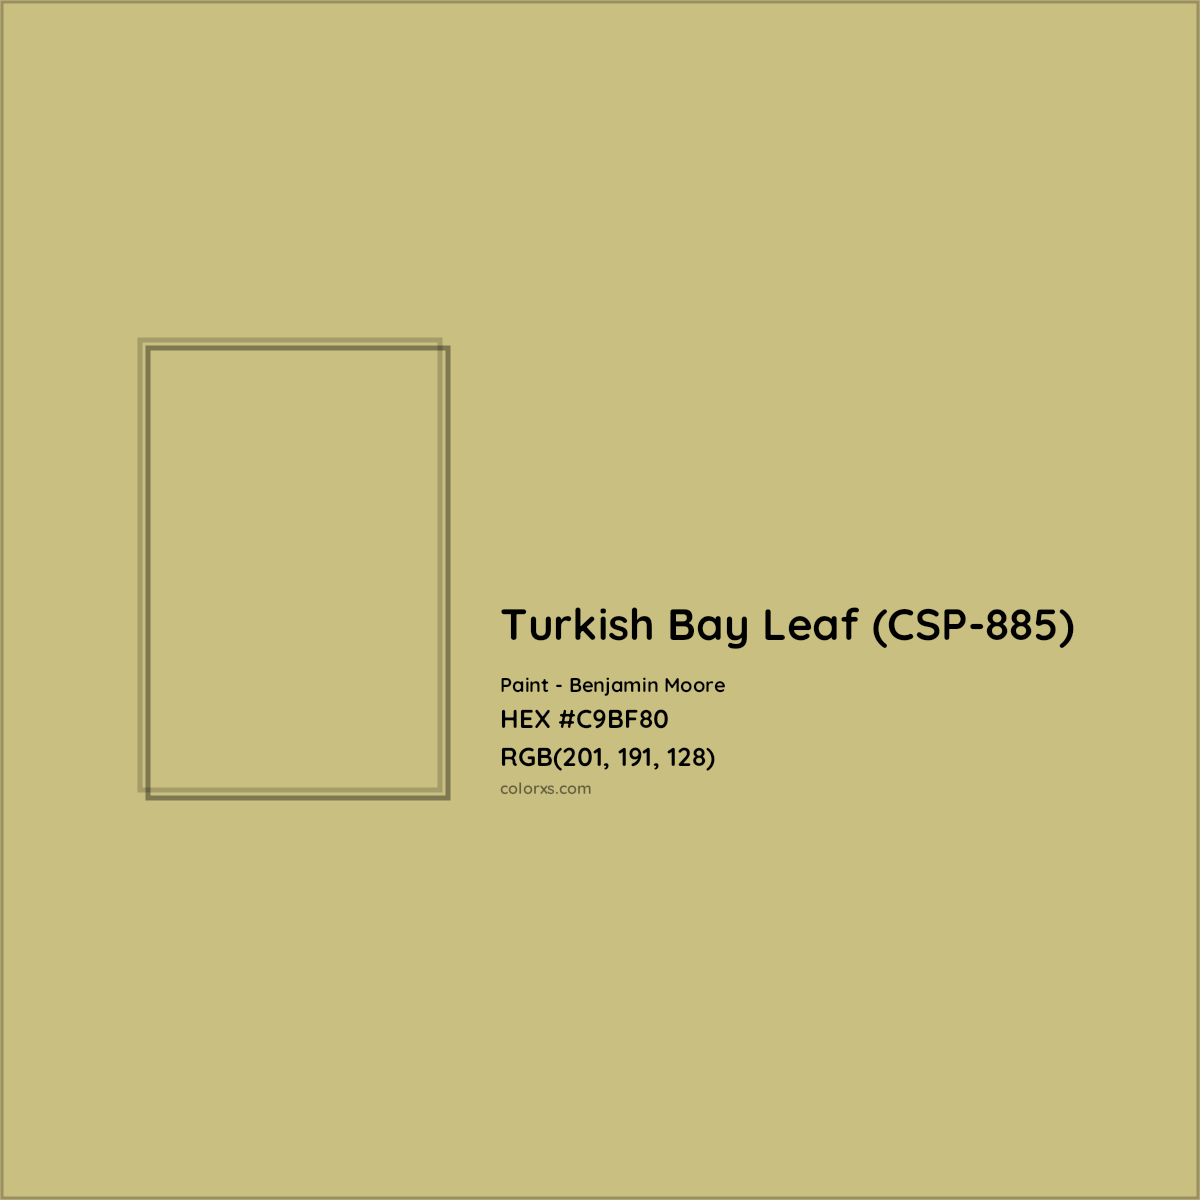 HEX #C9BF80 Turkish Bay Leaf (CSP-885) Paint Benjamin Moore - Color Code